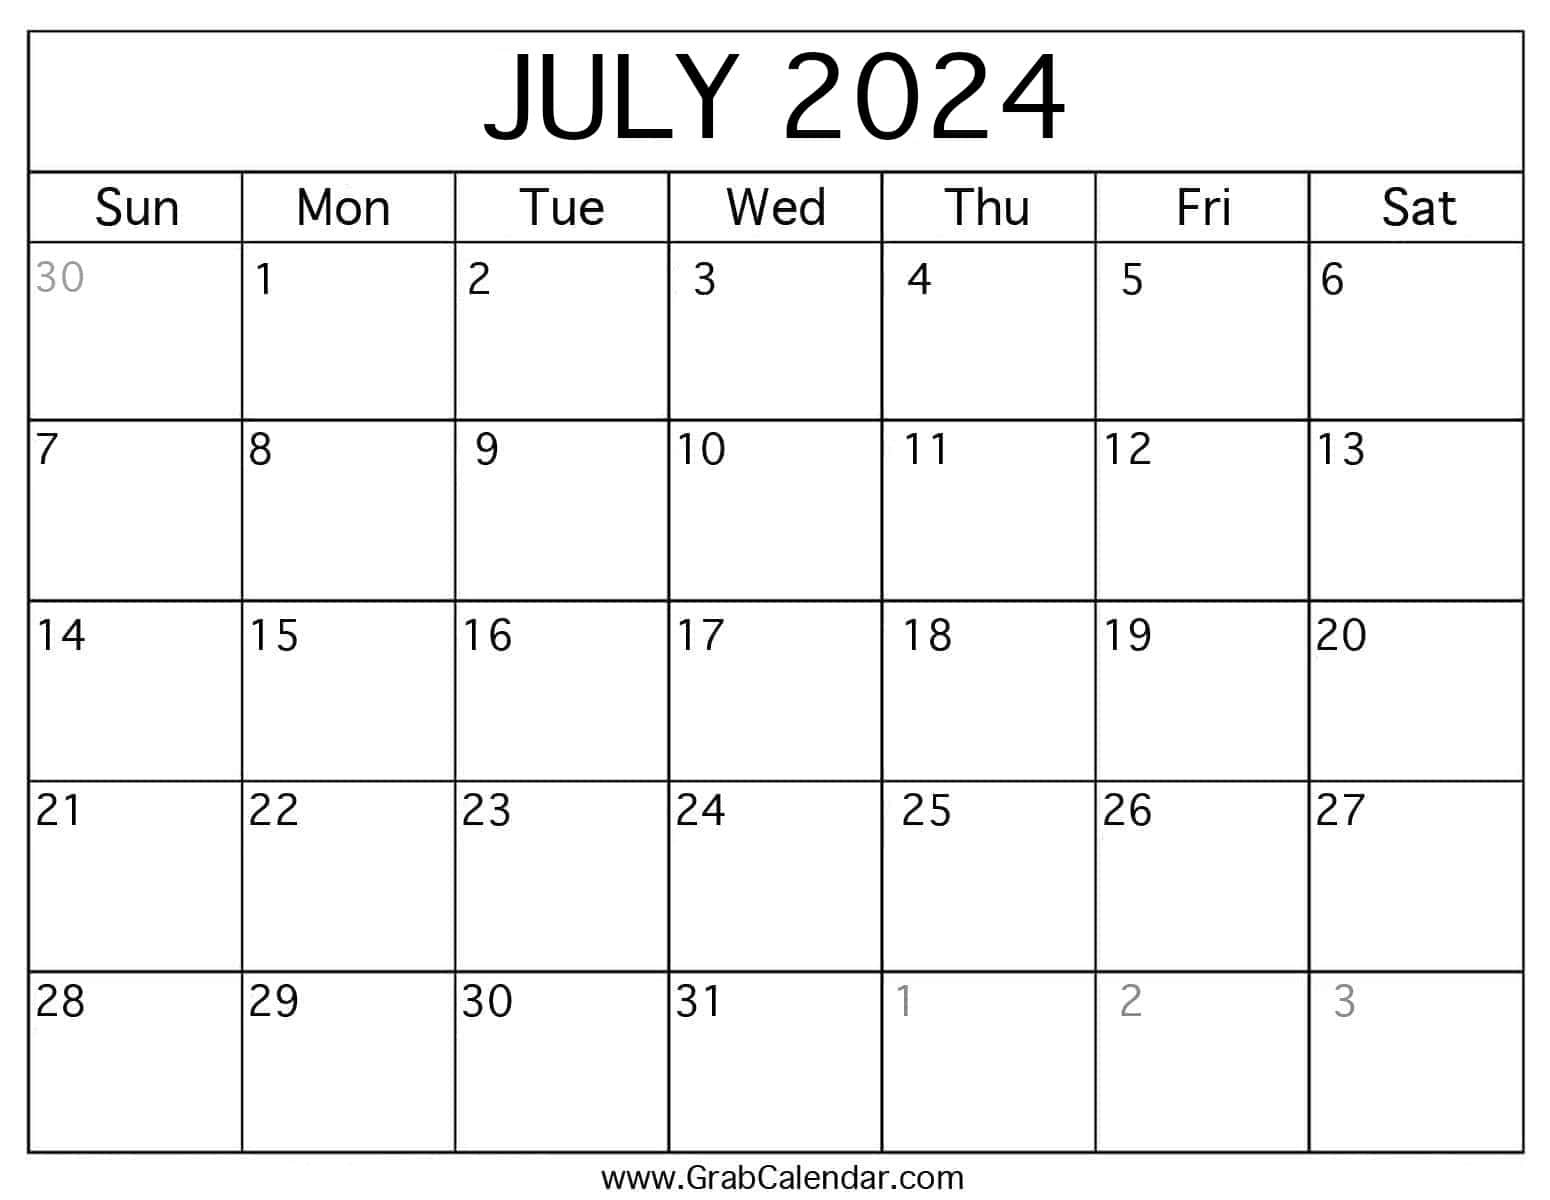 Printable July 2024 Calendar regarding Calendar of July 2024